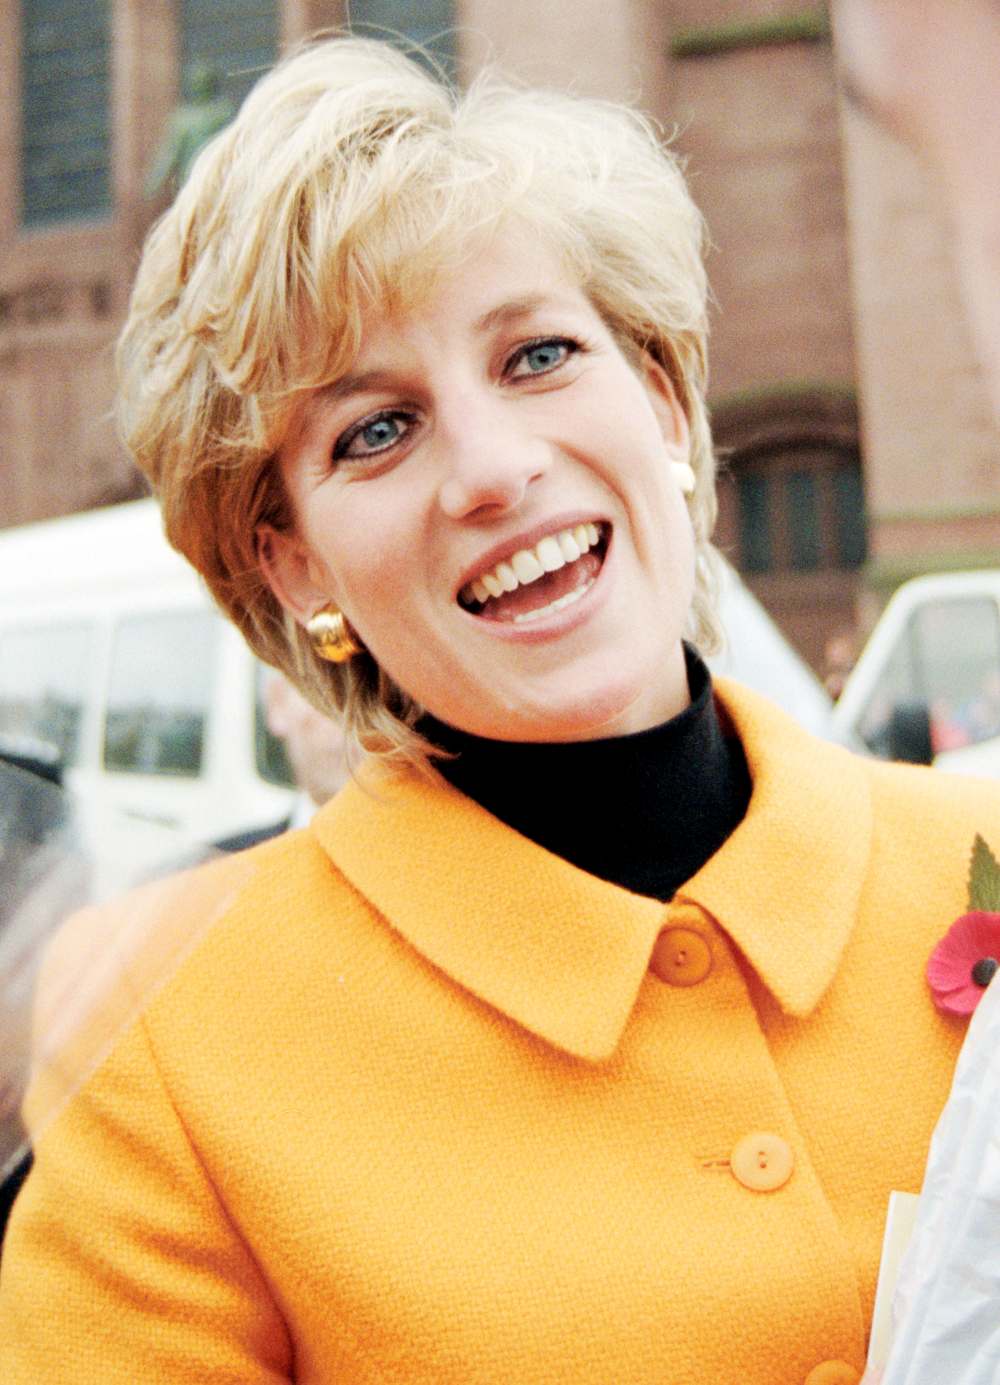 Former Royal Chef Describes Cooking Healthy Princess Diana